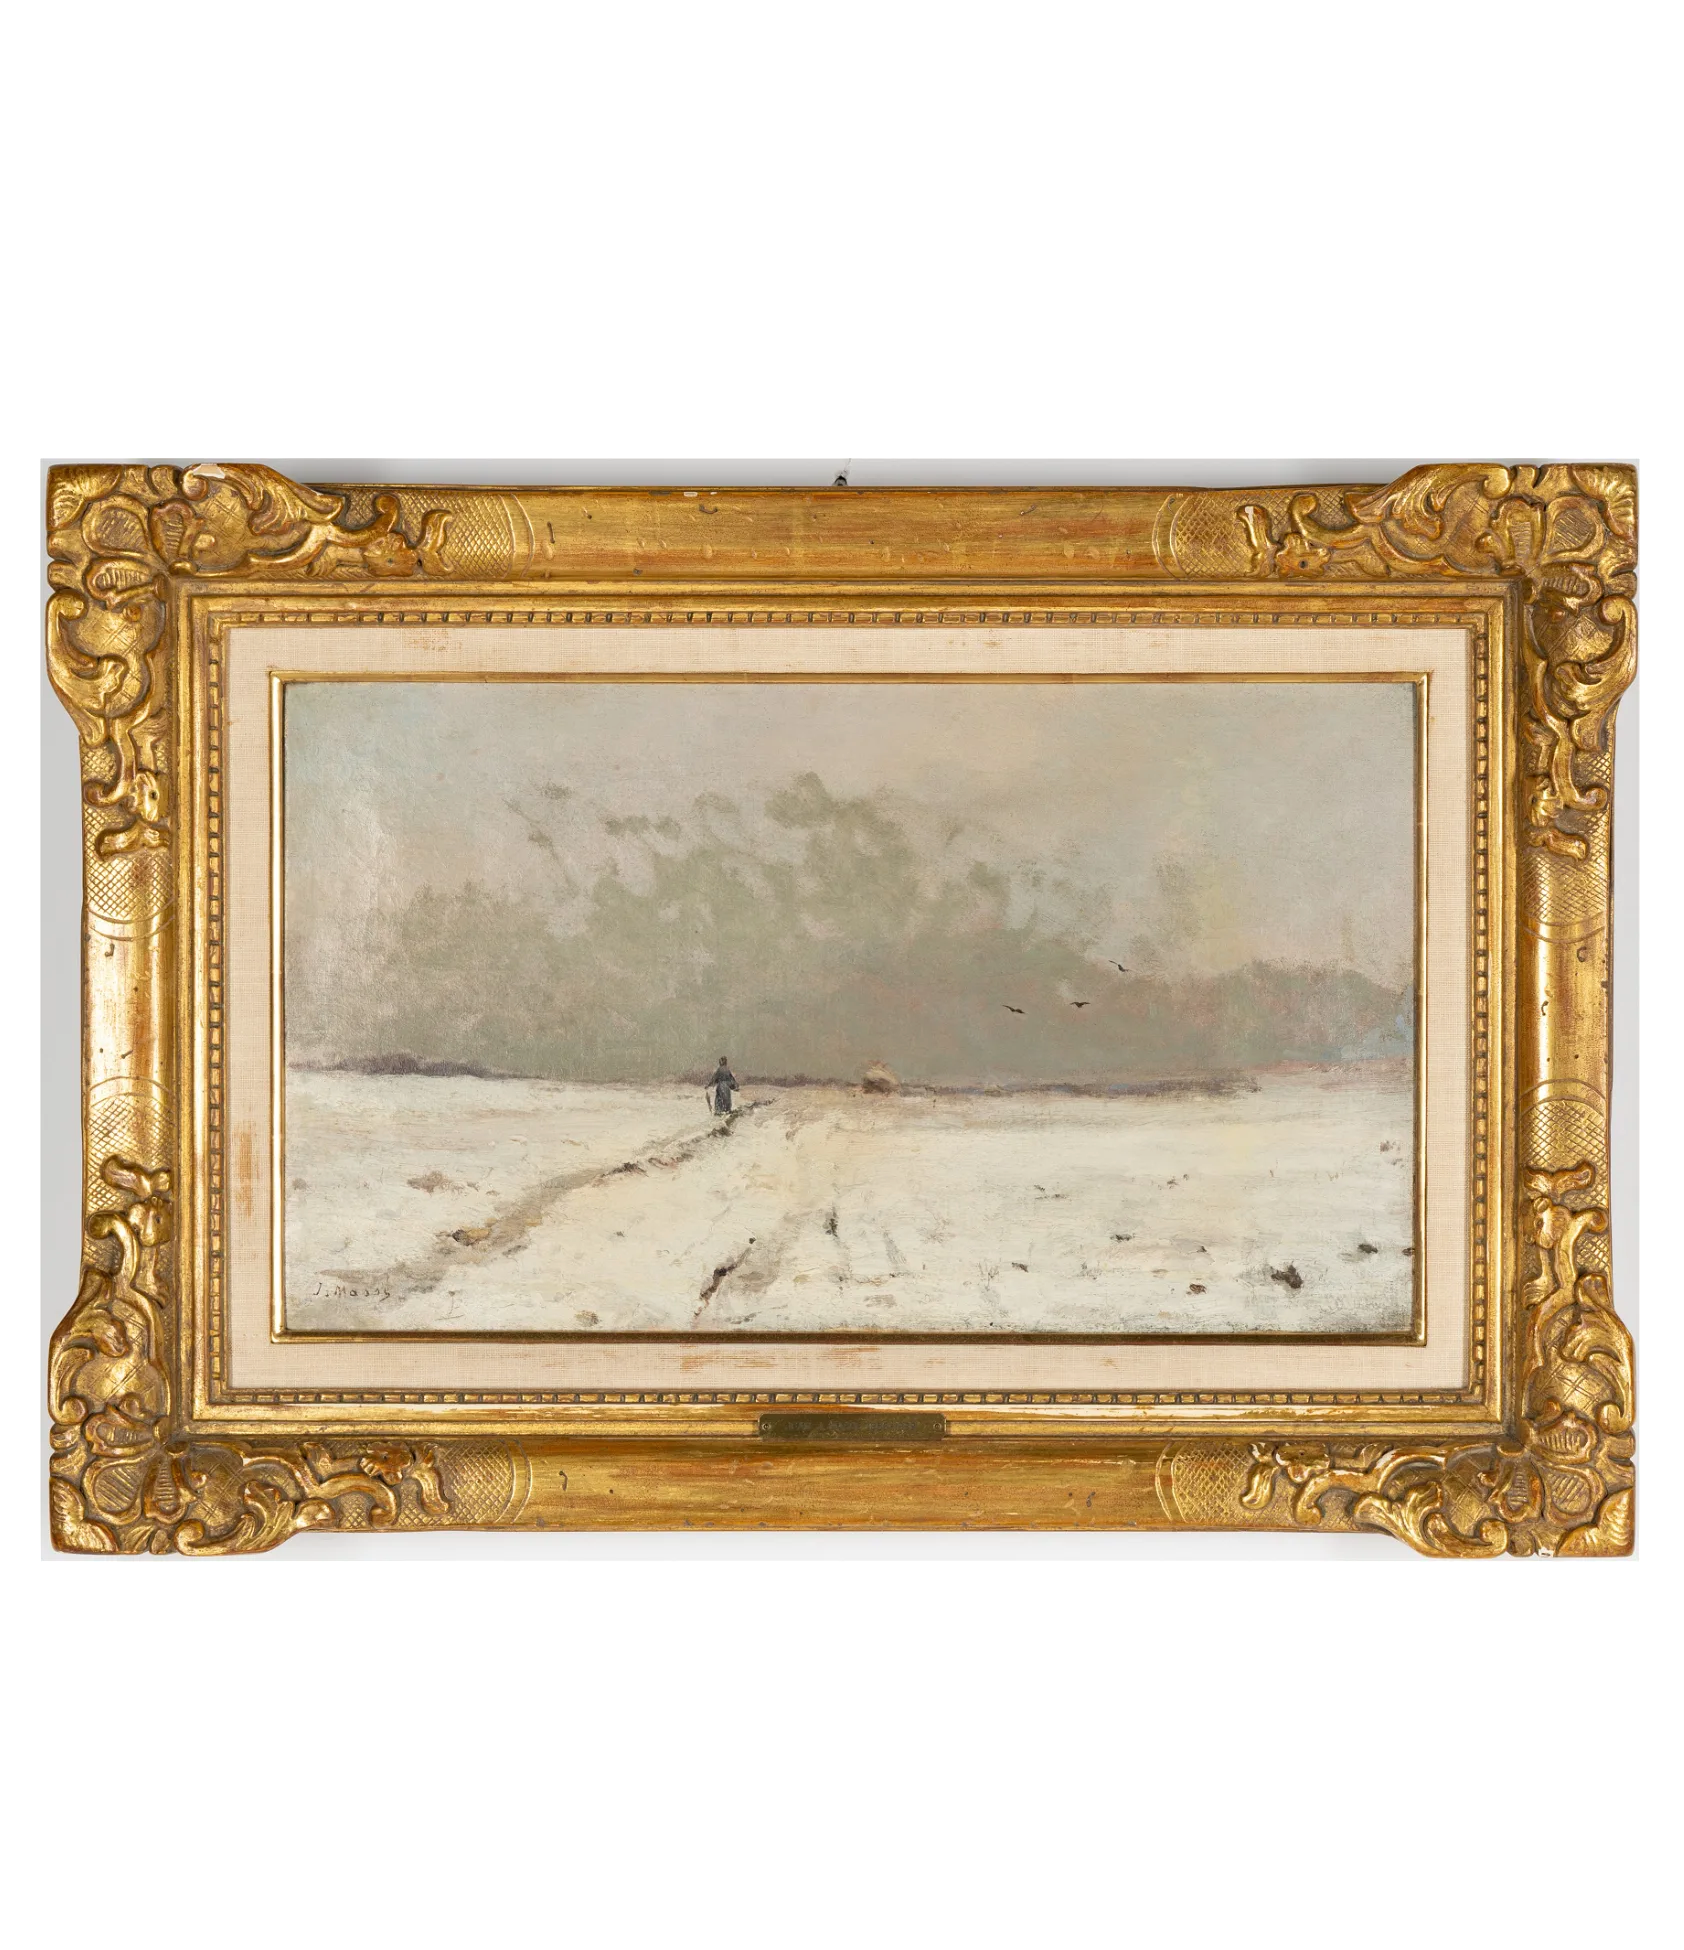 Impressionist Promenade en Hiver (Walk in Winter) Jean Eugene Julien Masse (1856 - 1950) Oil on Canvas Painting | Work of Man